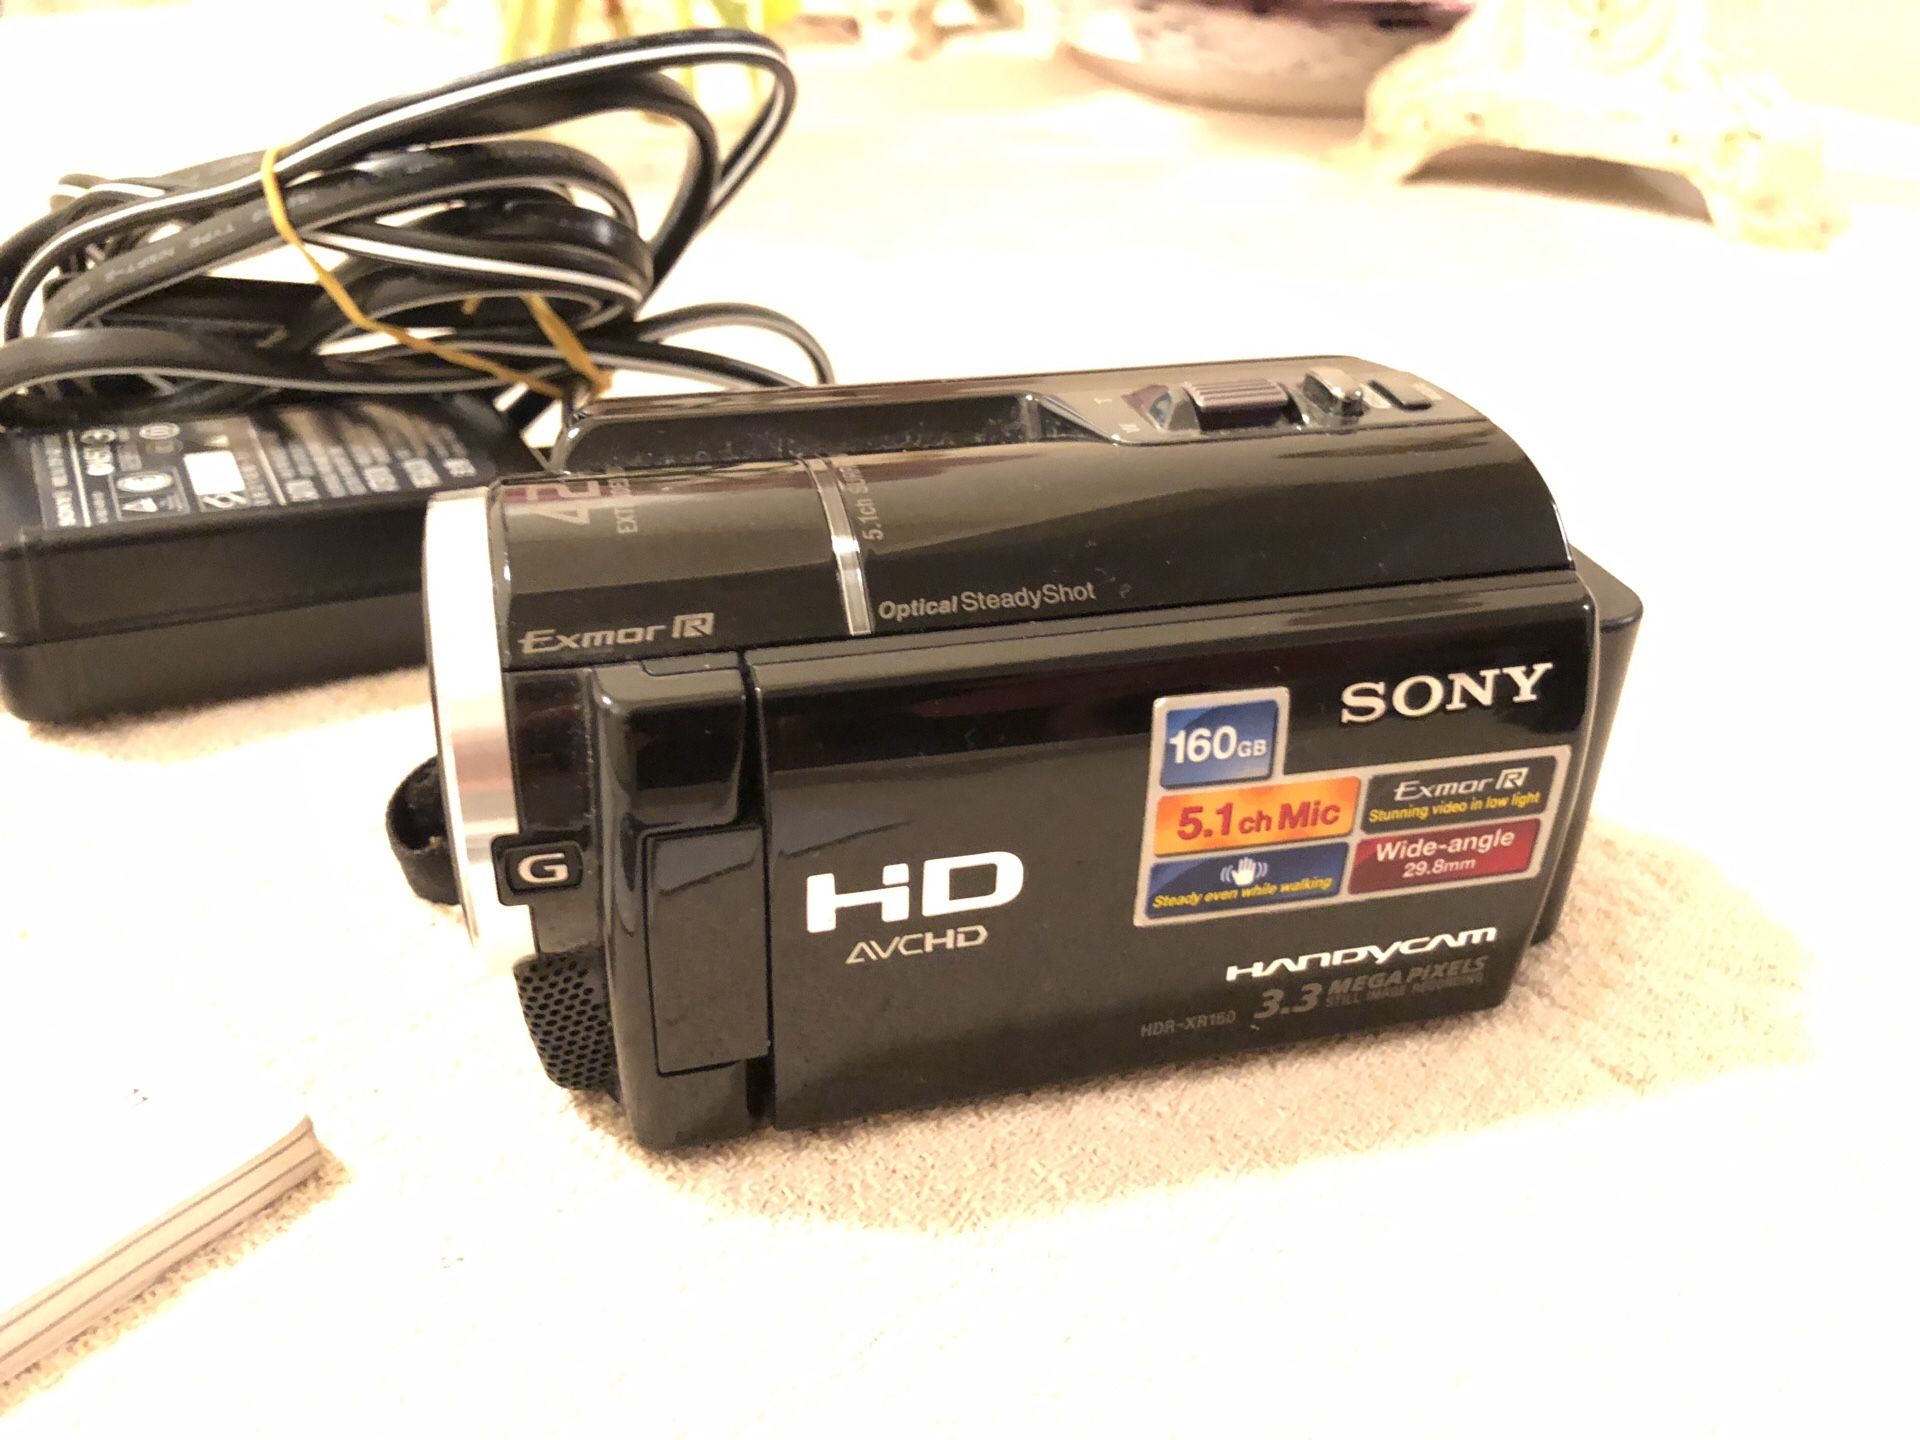 Sony handycam HDR-XR160